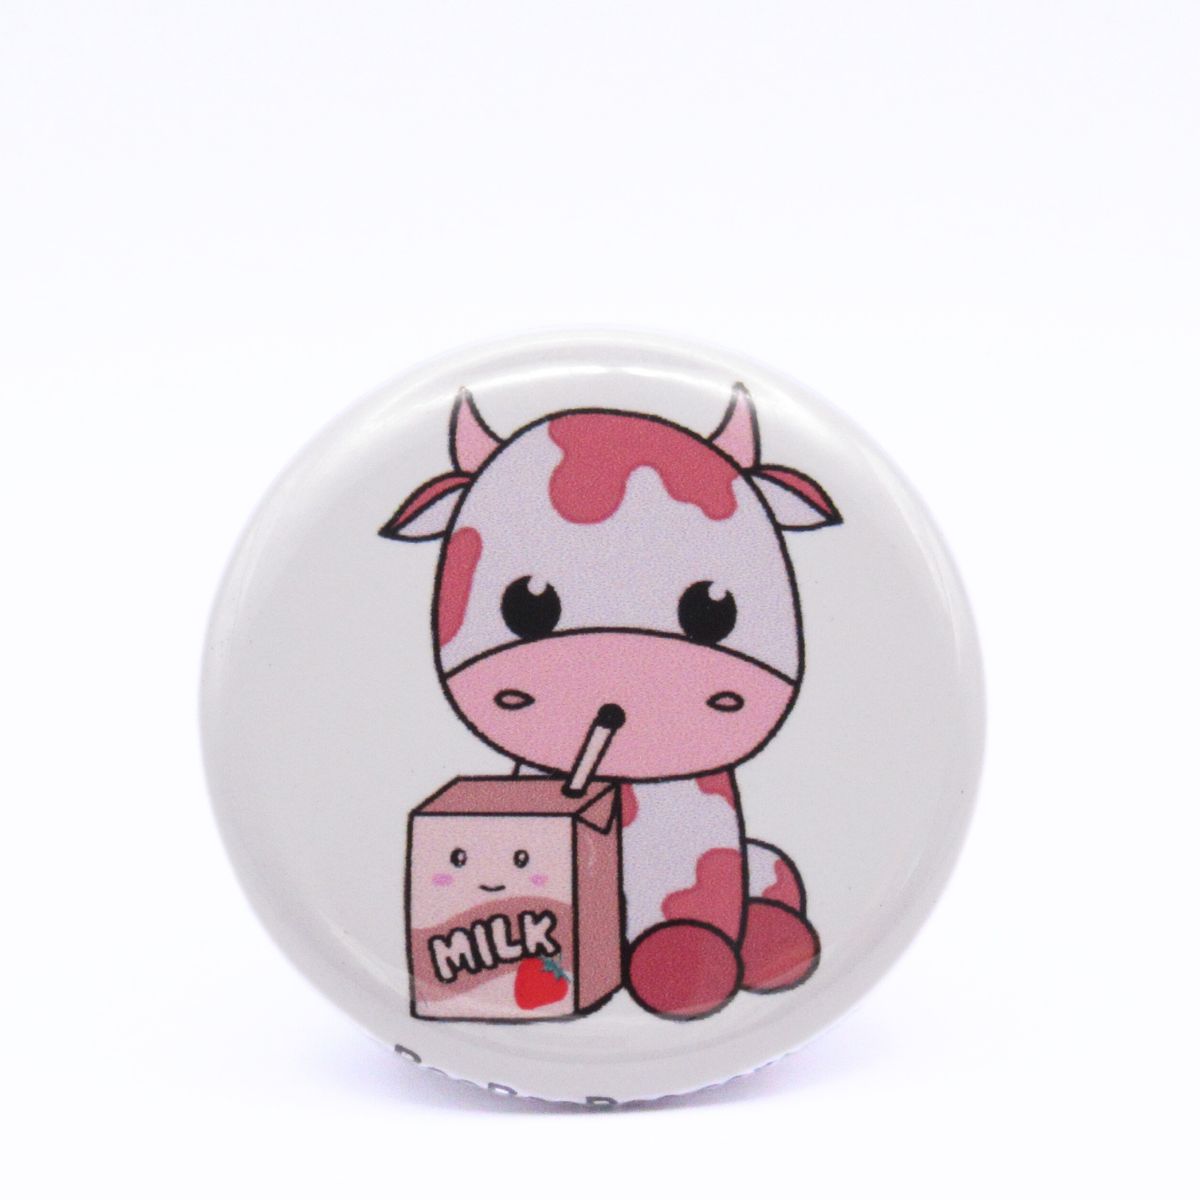 BooBooRoo Pinback Button (i.e. button, badge, pin) of a Cute Kawaii style pink, strawberry cow drinking strawberry milk from a straw from a small milk carton. 